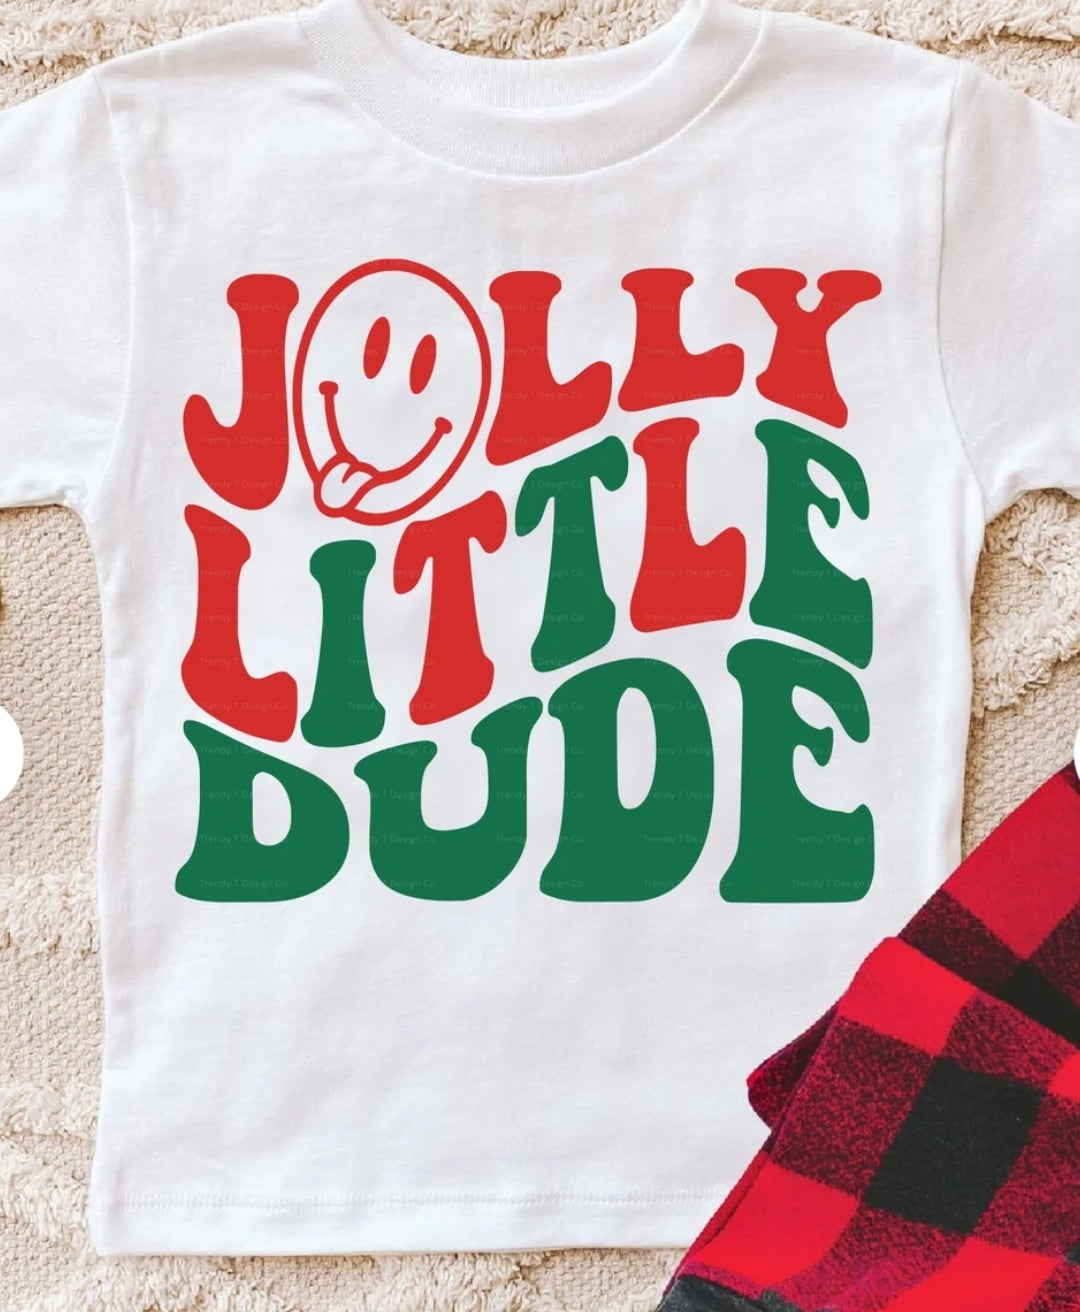 Jolly little dude kids graphic tee